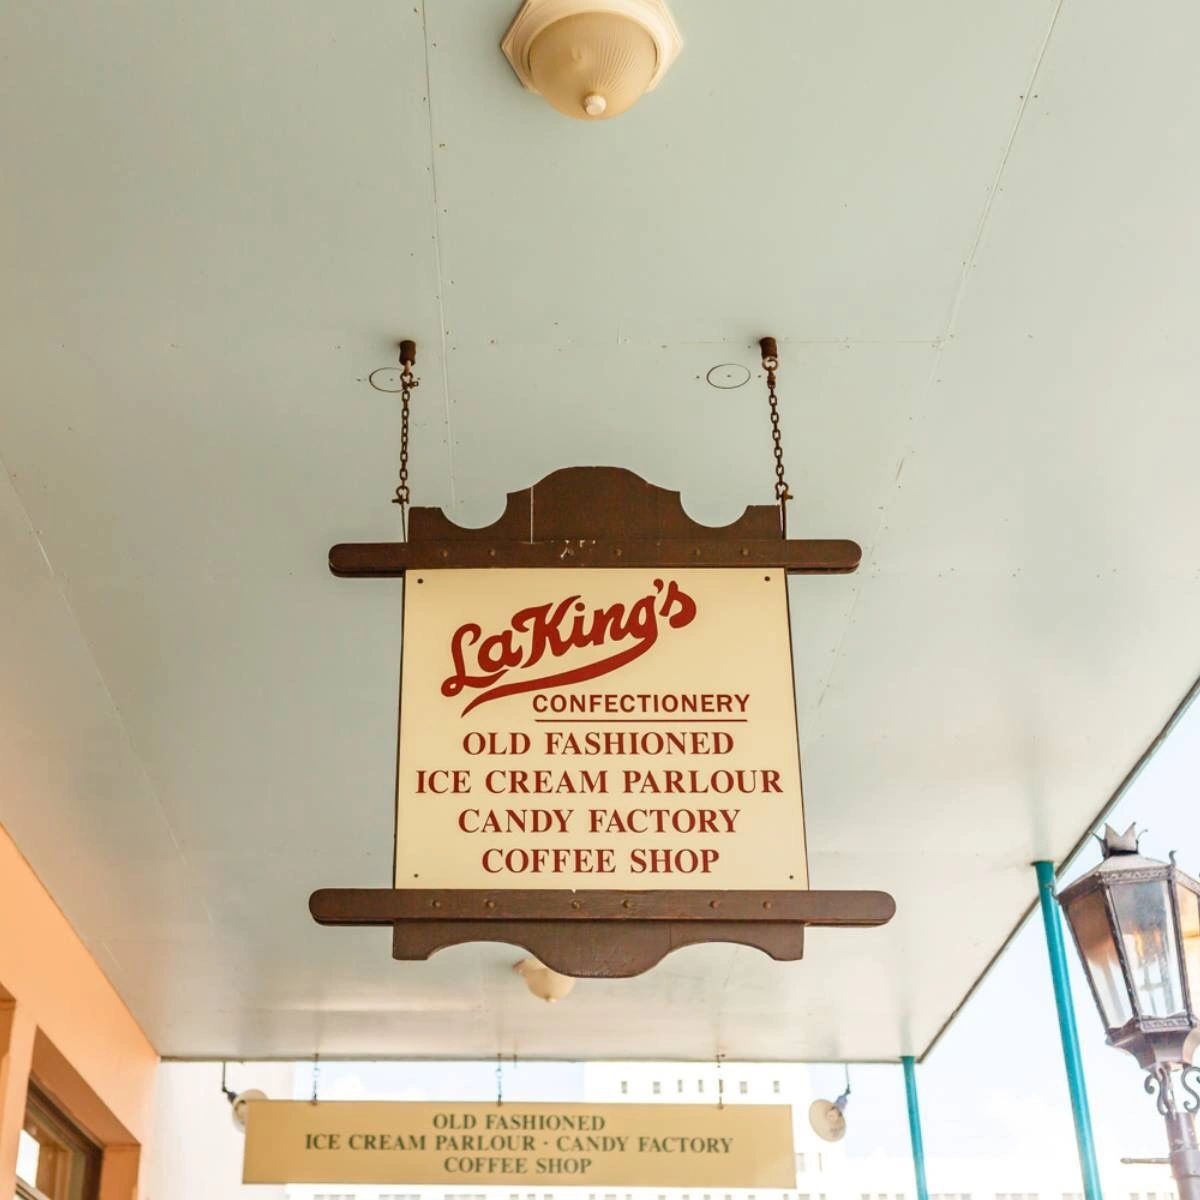  La King's Confectionery - Galveston, TX